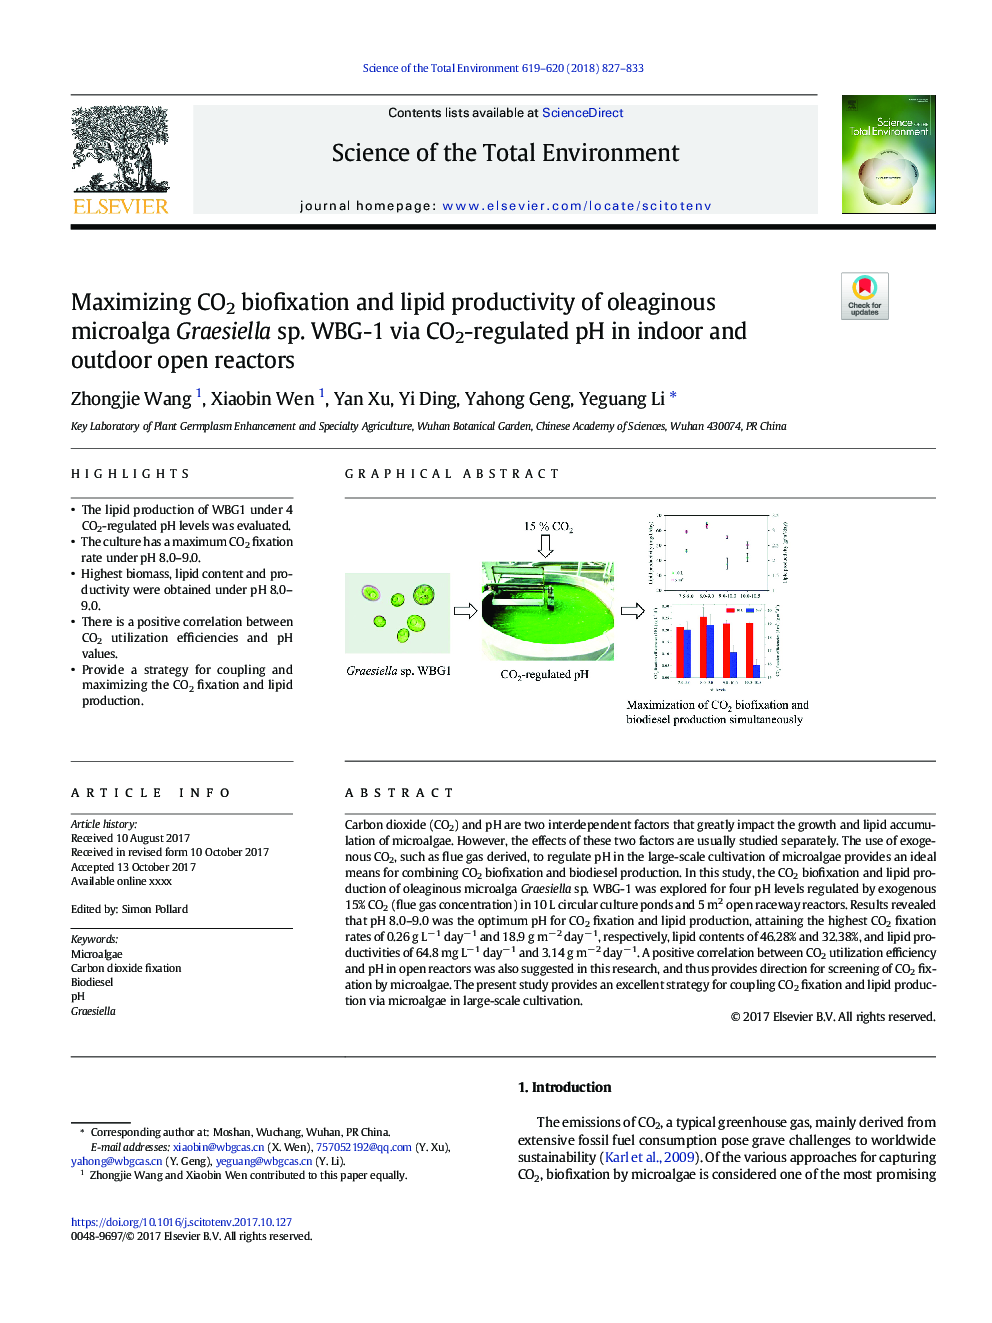 Maximizing CO2 biofixation and lipid productivity of oleaginous microalga Graesiella sp. WBGÂ­1 via CO2-regulated pH in indoor and outdoor open reactors